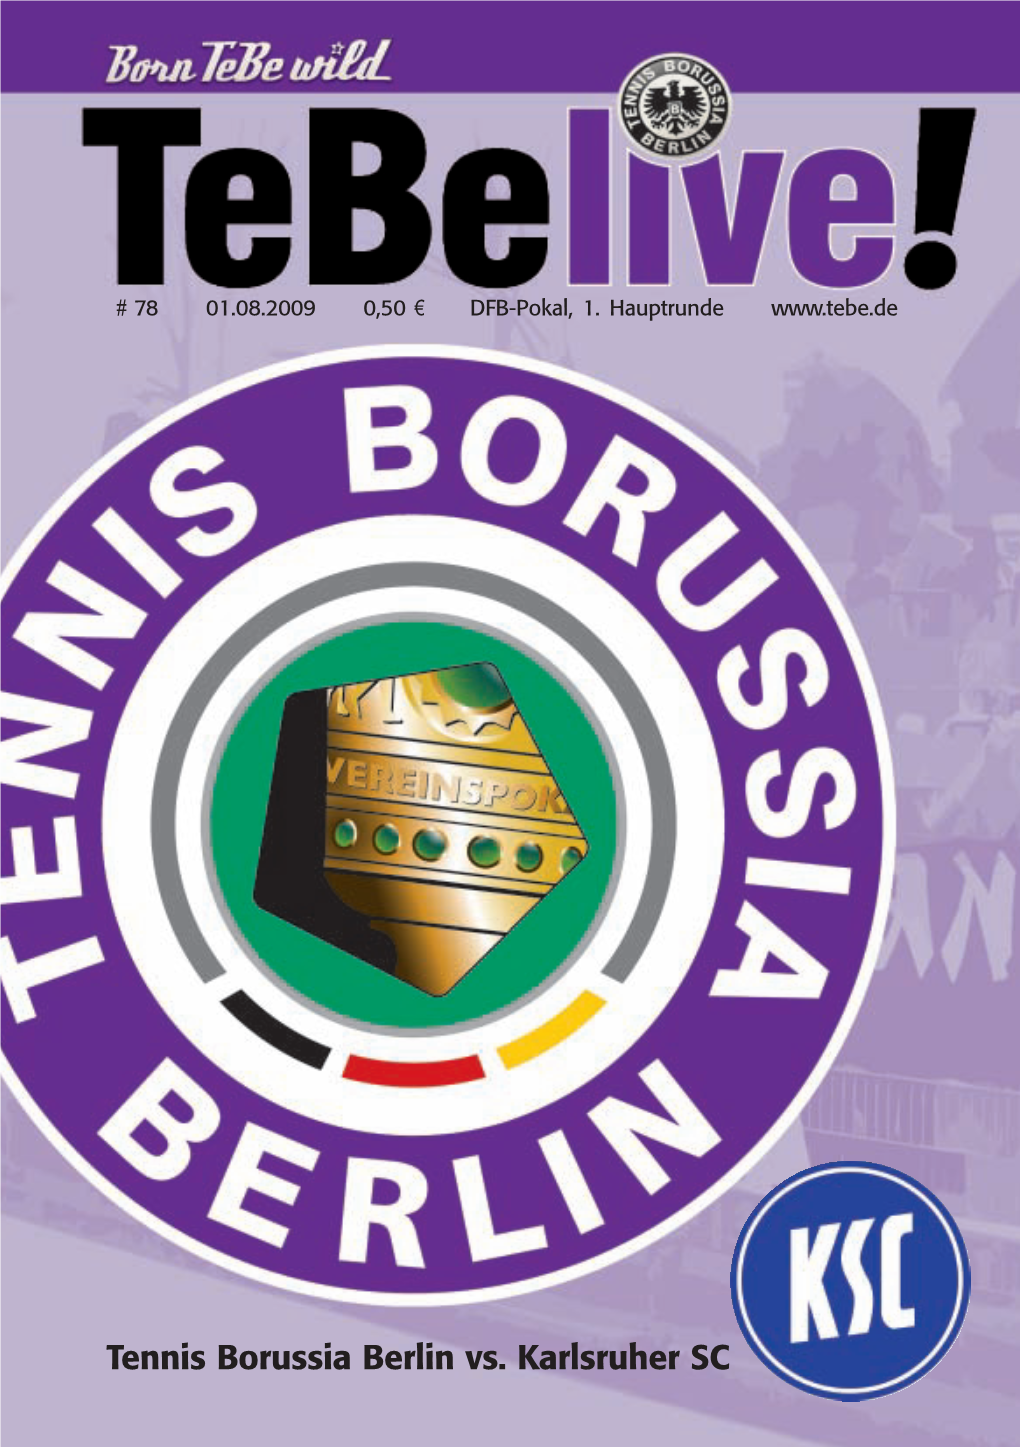 Tennis Borussia Berlin Vs. Karlsruher SC